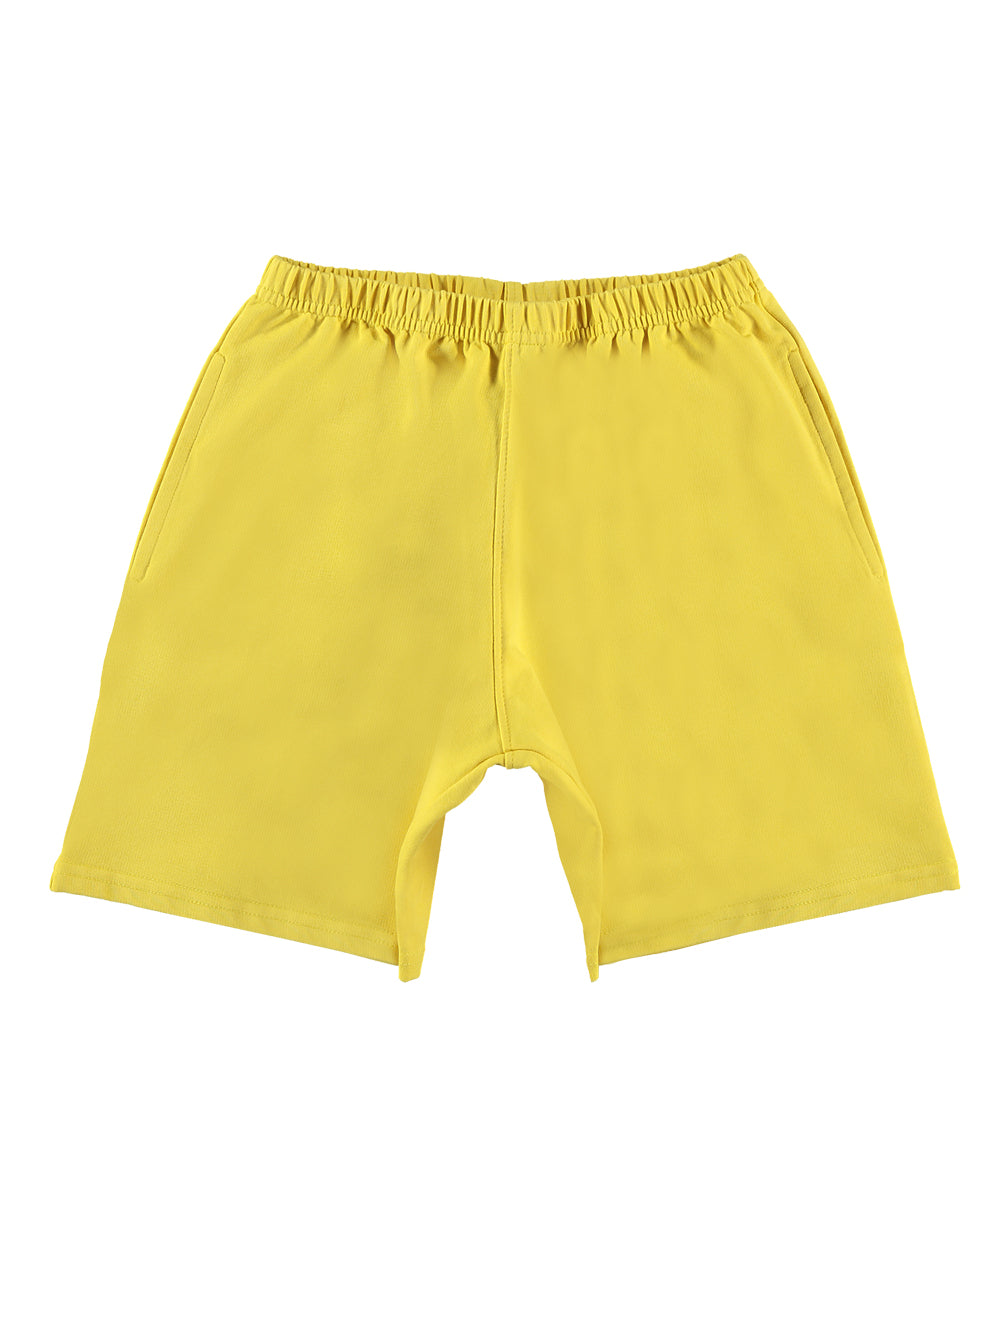 Yellow Surfer Shorts